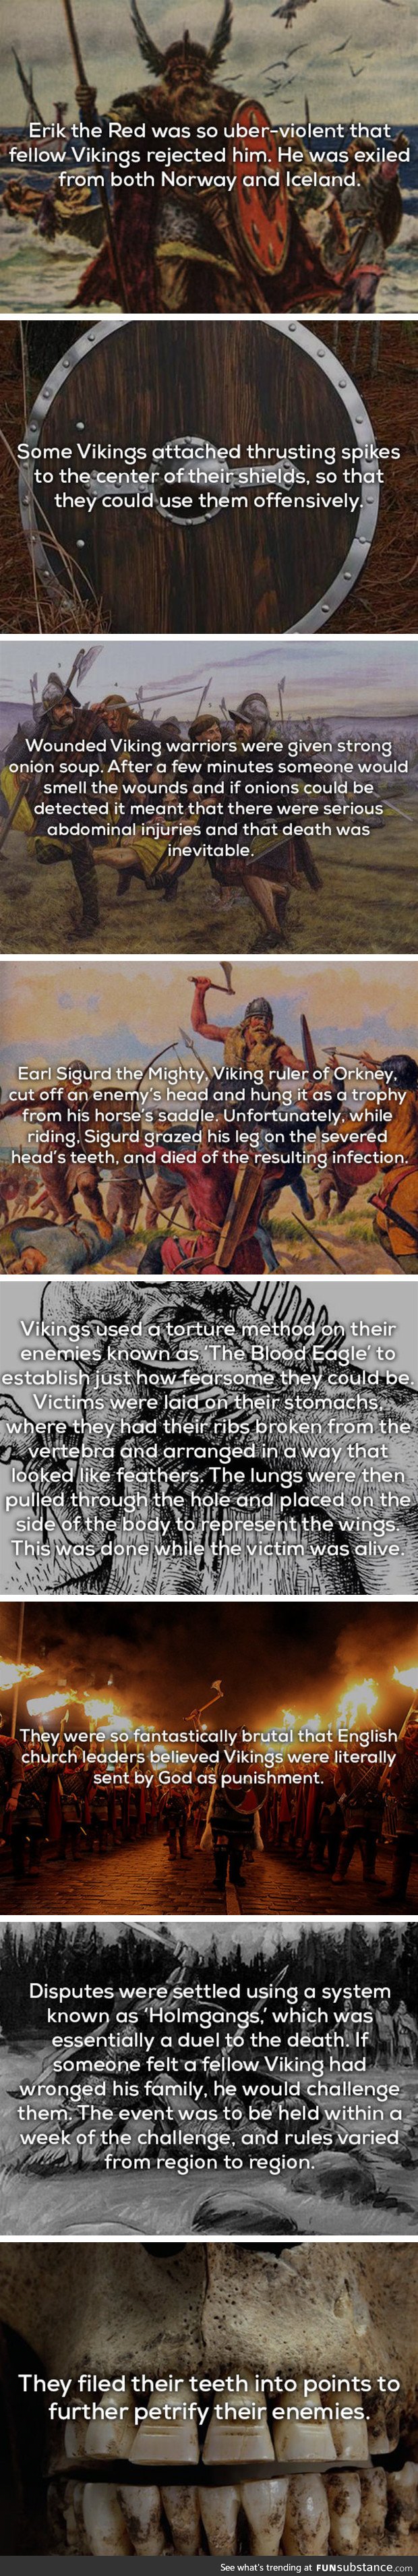 Vikings facts